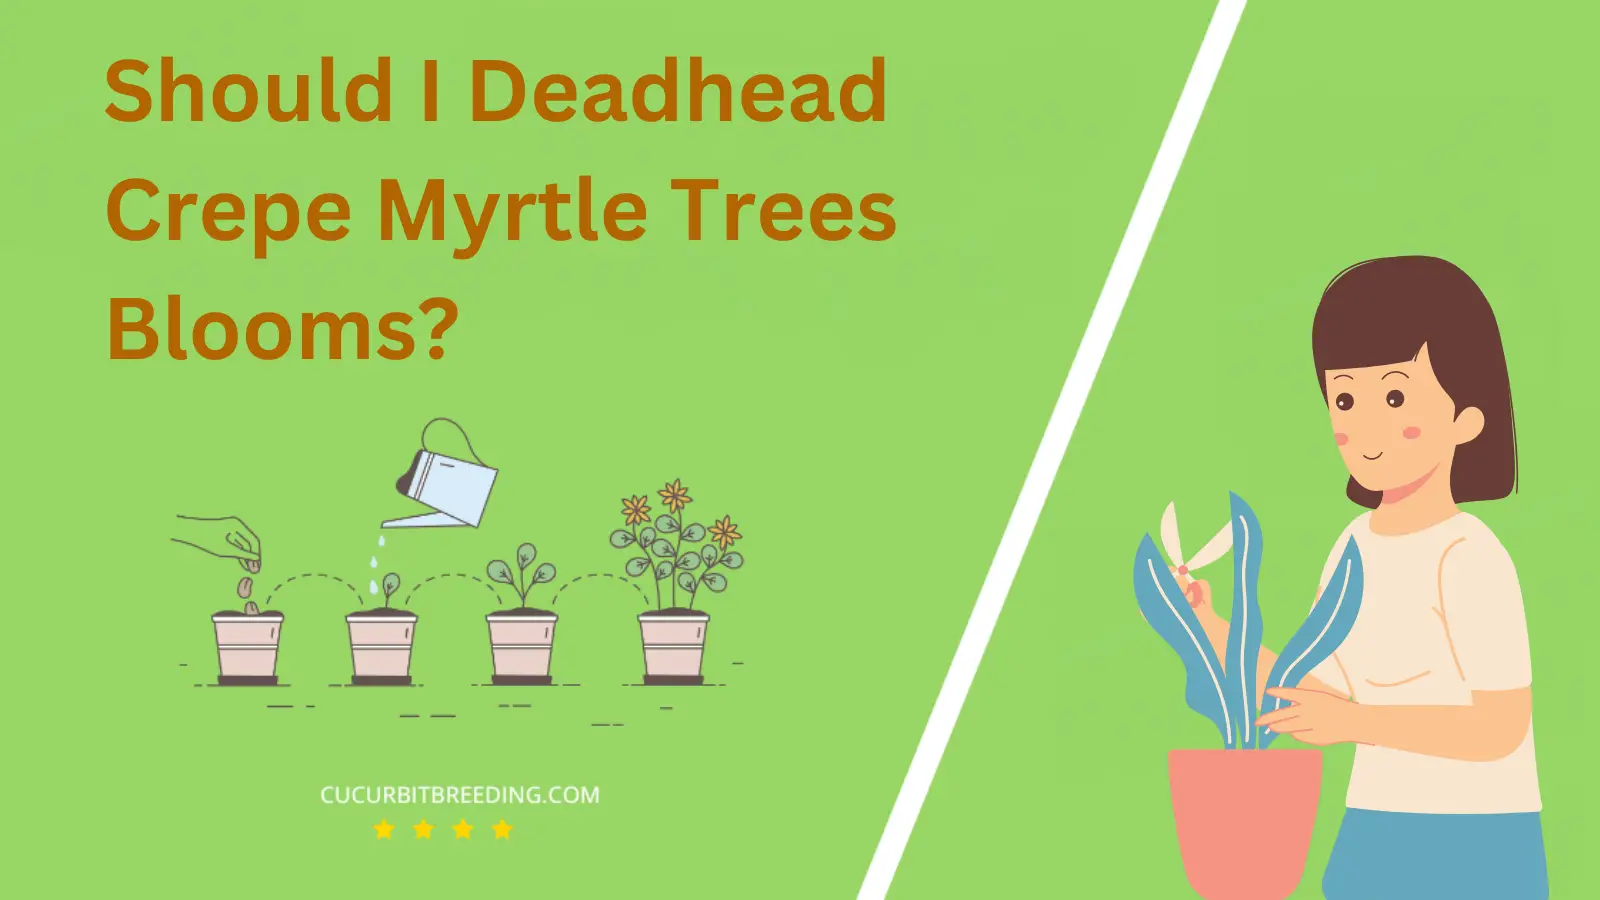 Should I Deadhead Crepe Myrtle Trees Blooms?